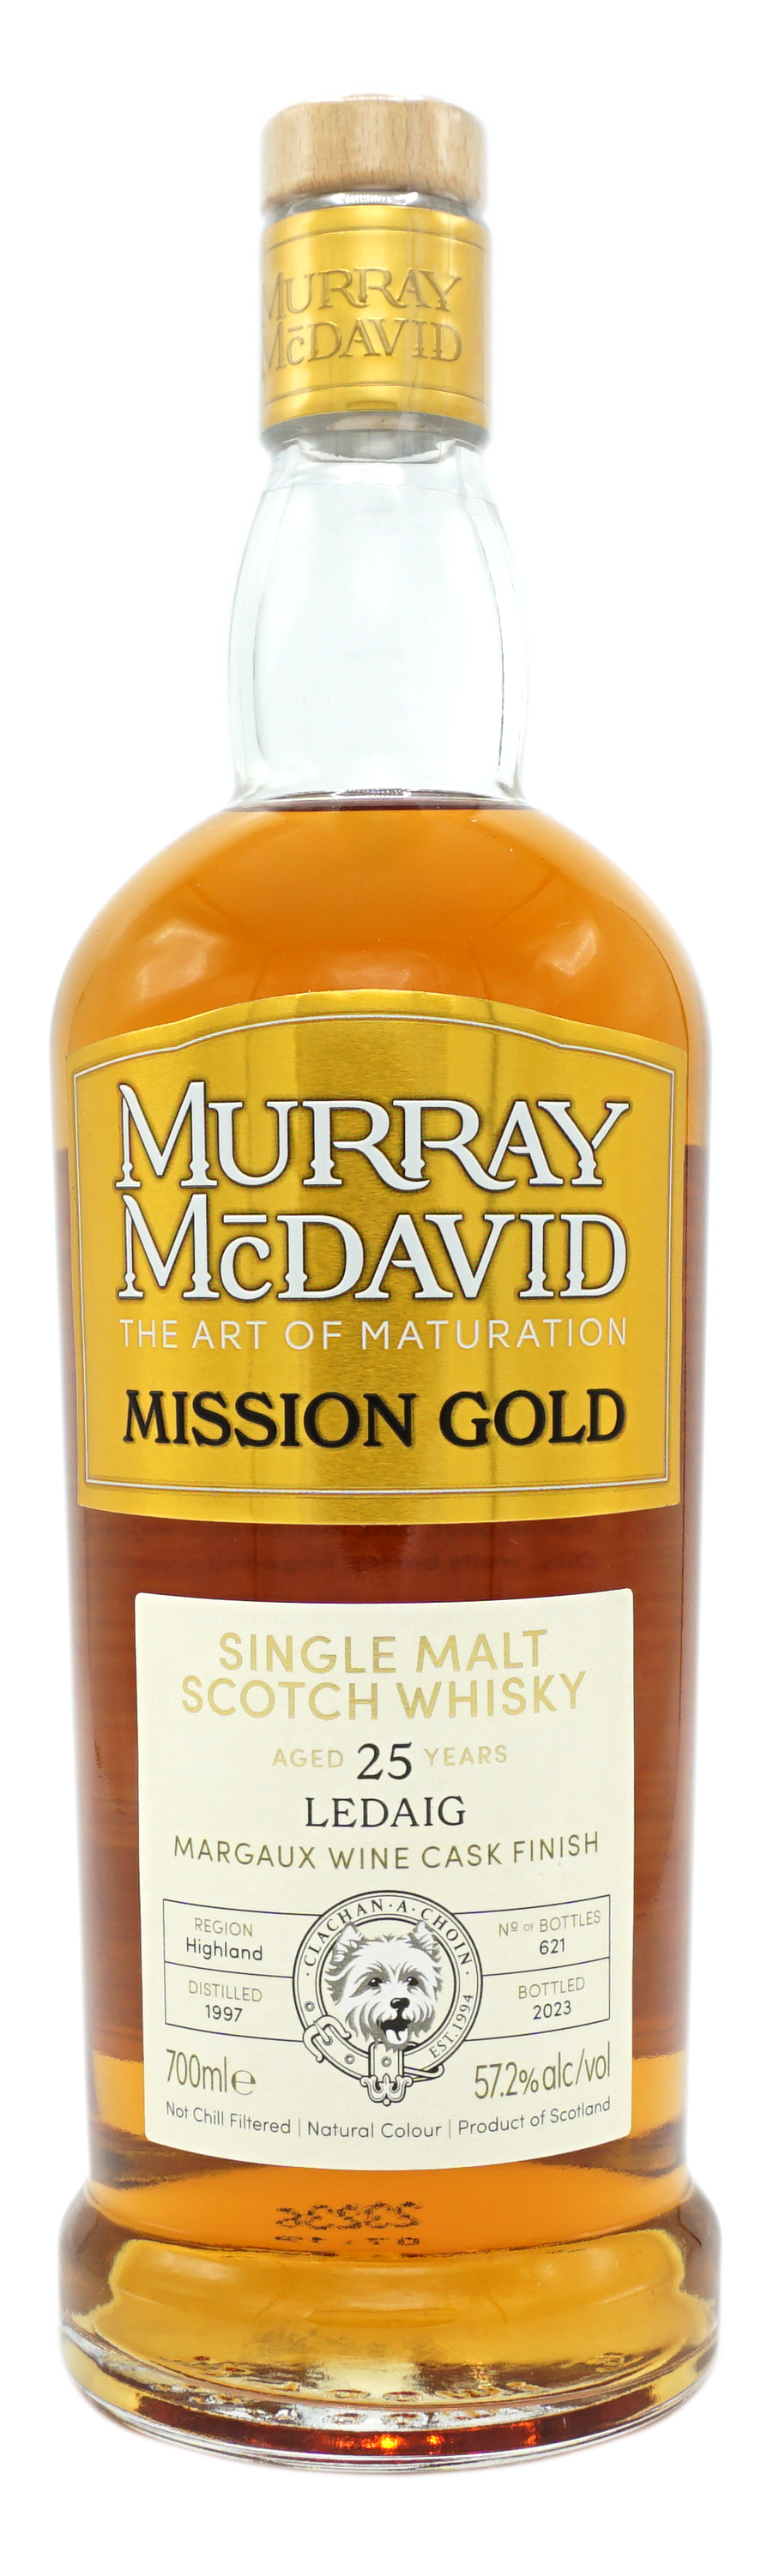 MurrayMcDavid MissionGold Ledaig 25y MargauxWineCask 57,2% Fles